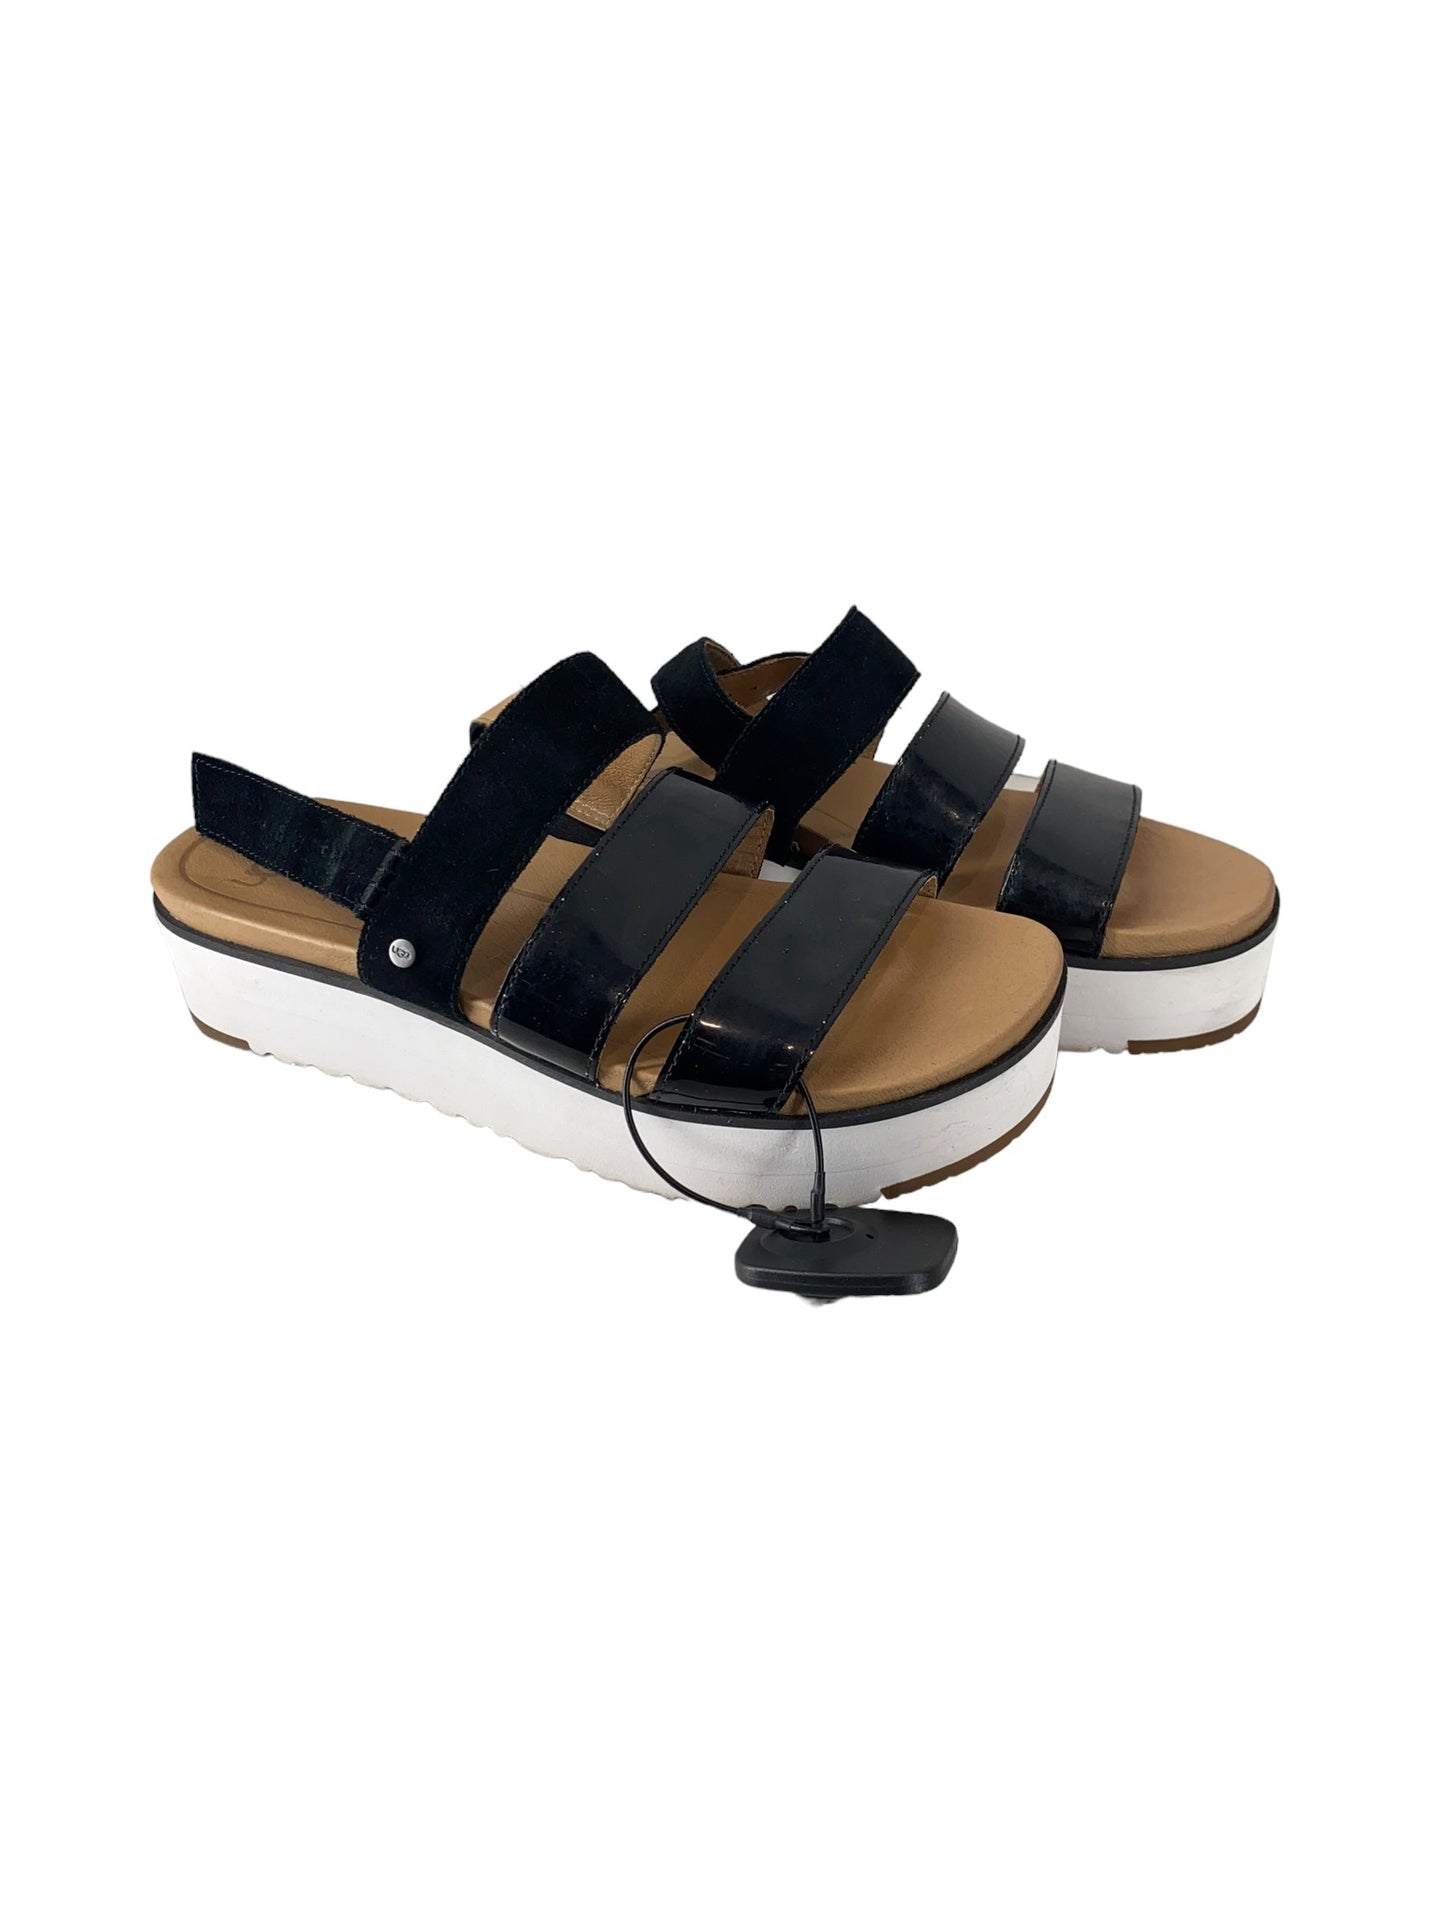 Black Shoes Heels Wedge Ugg, Size 7.5